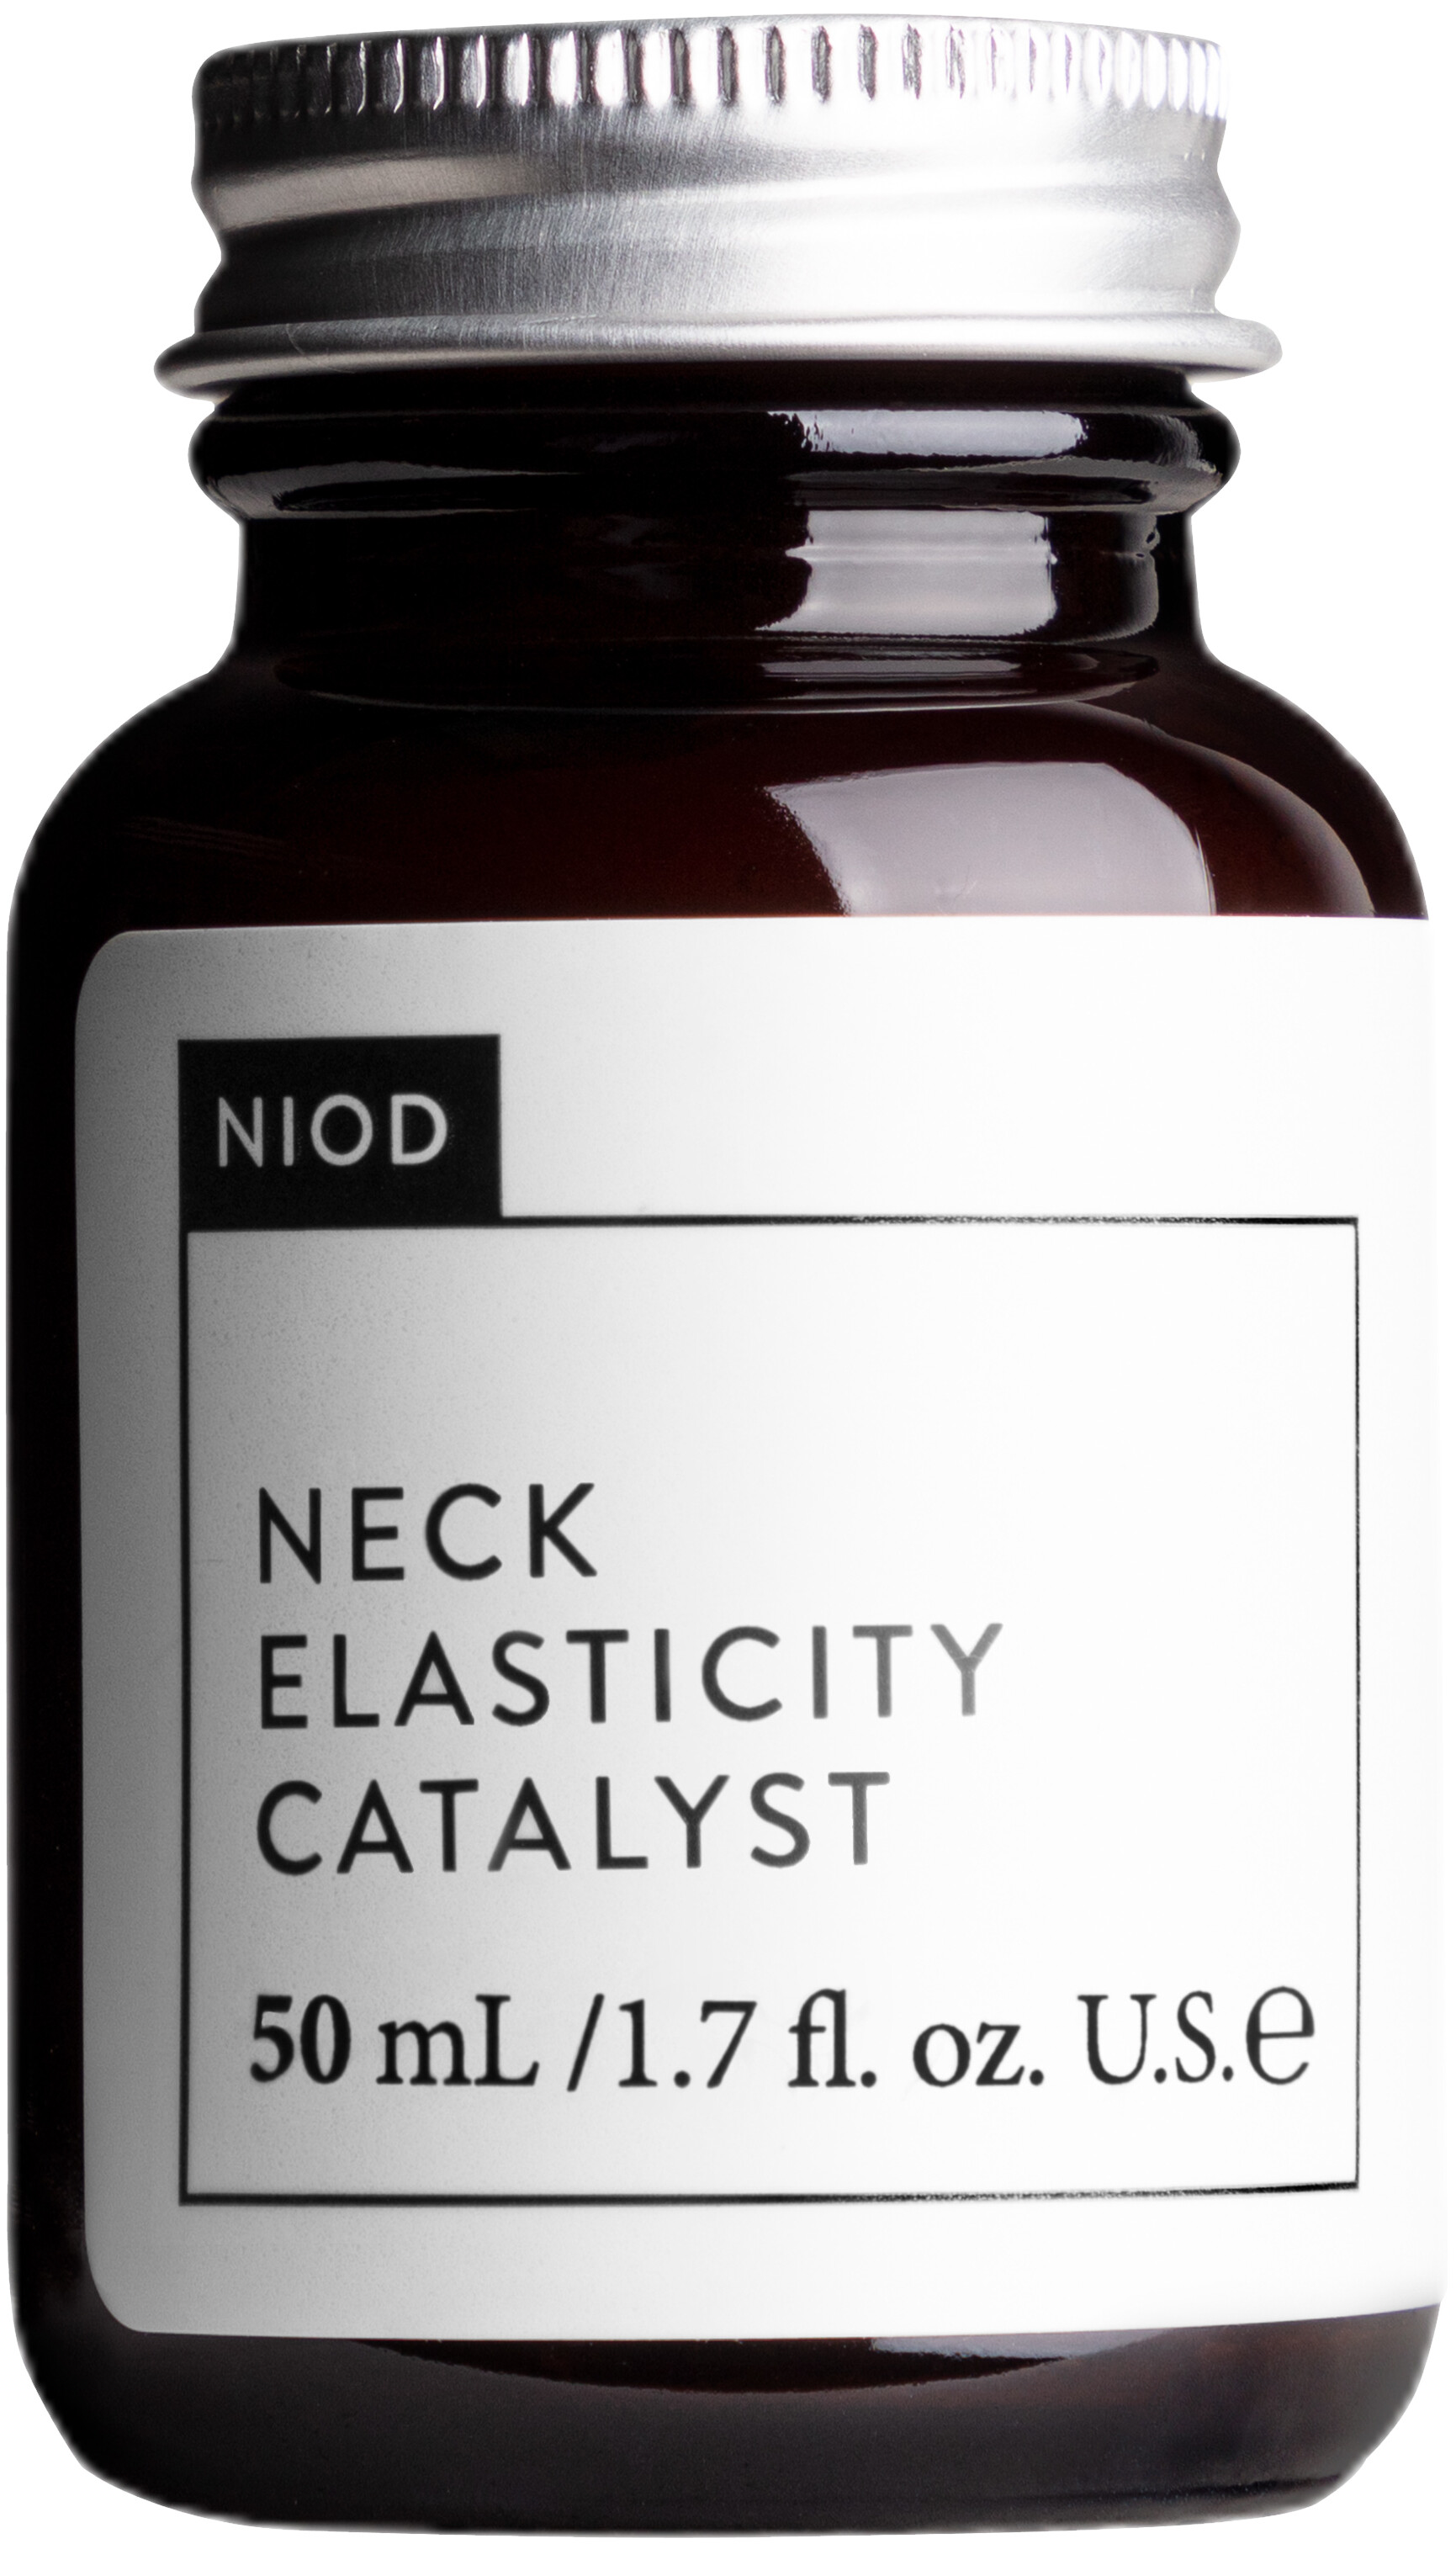 NIOD Neck Elasticity Catalyst 50ml